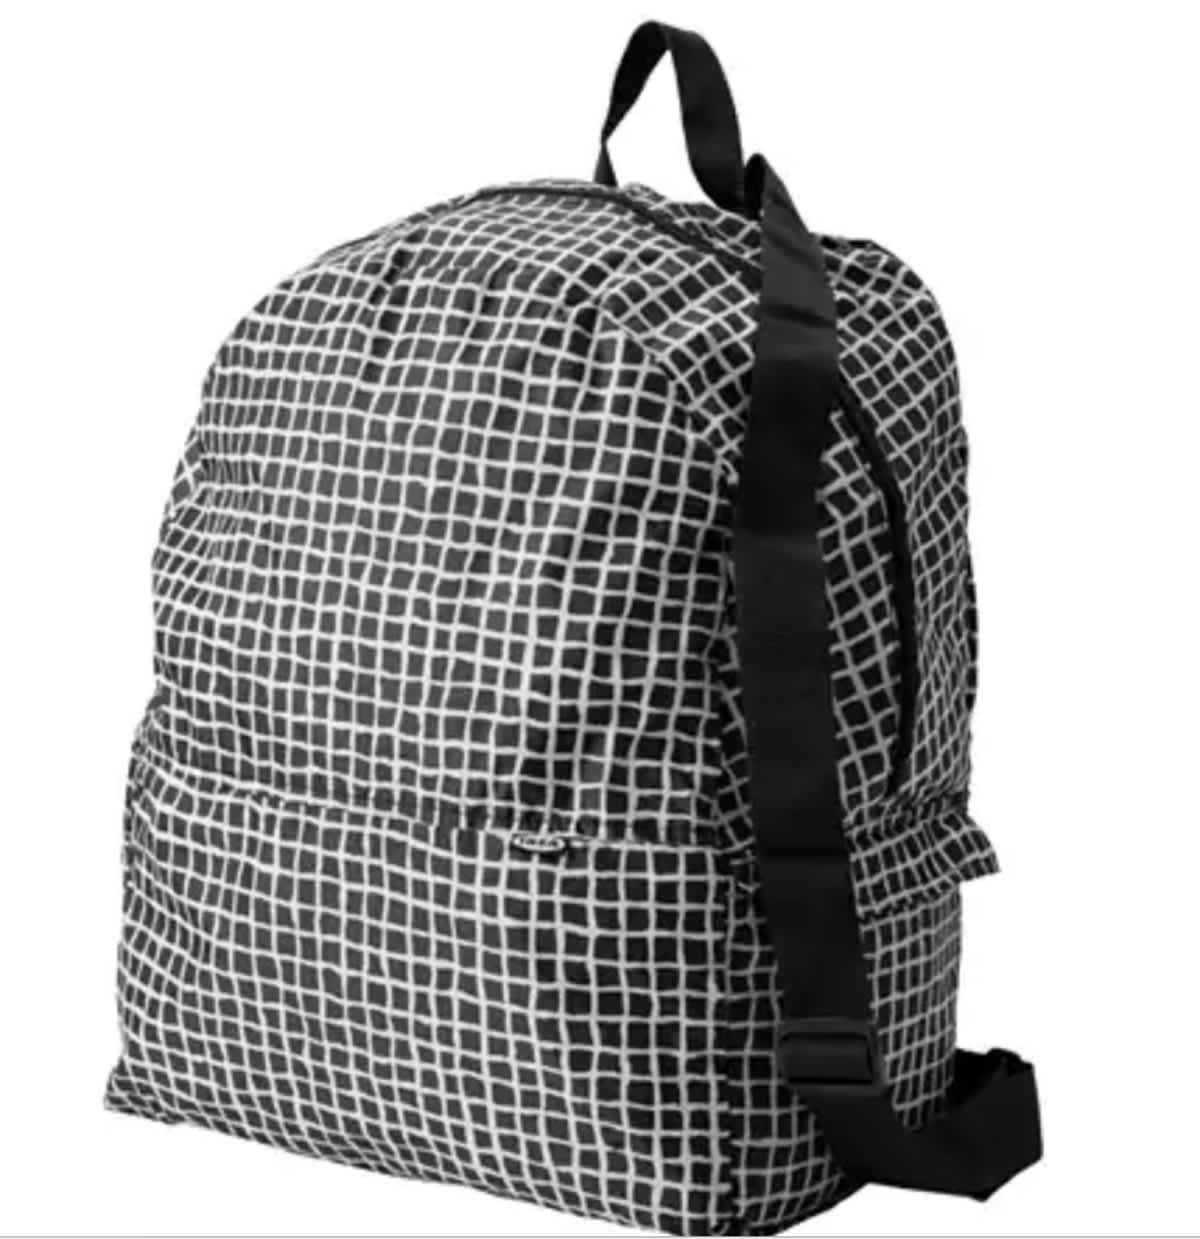 Backpack Folding bag School Grocery Light Weight Foldable IKEA KNALLA NEW 